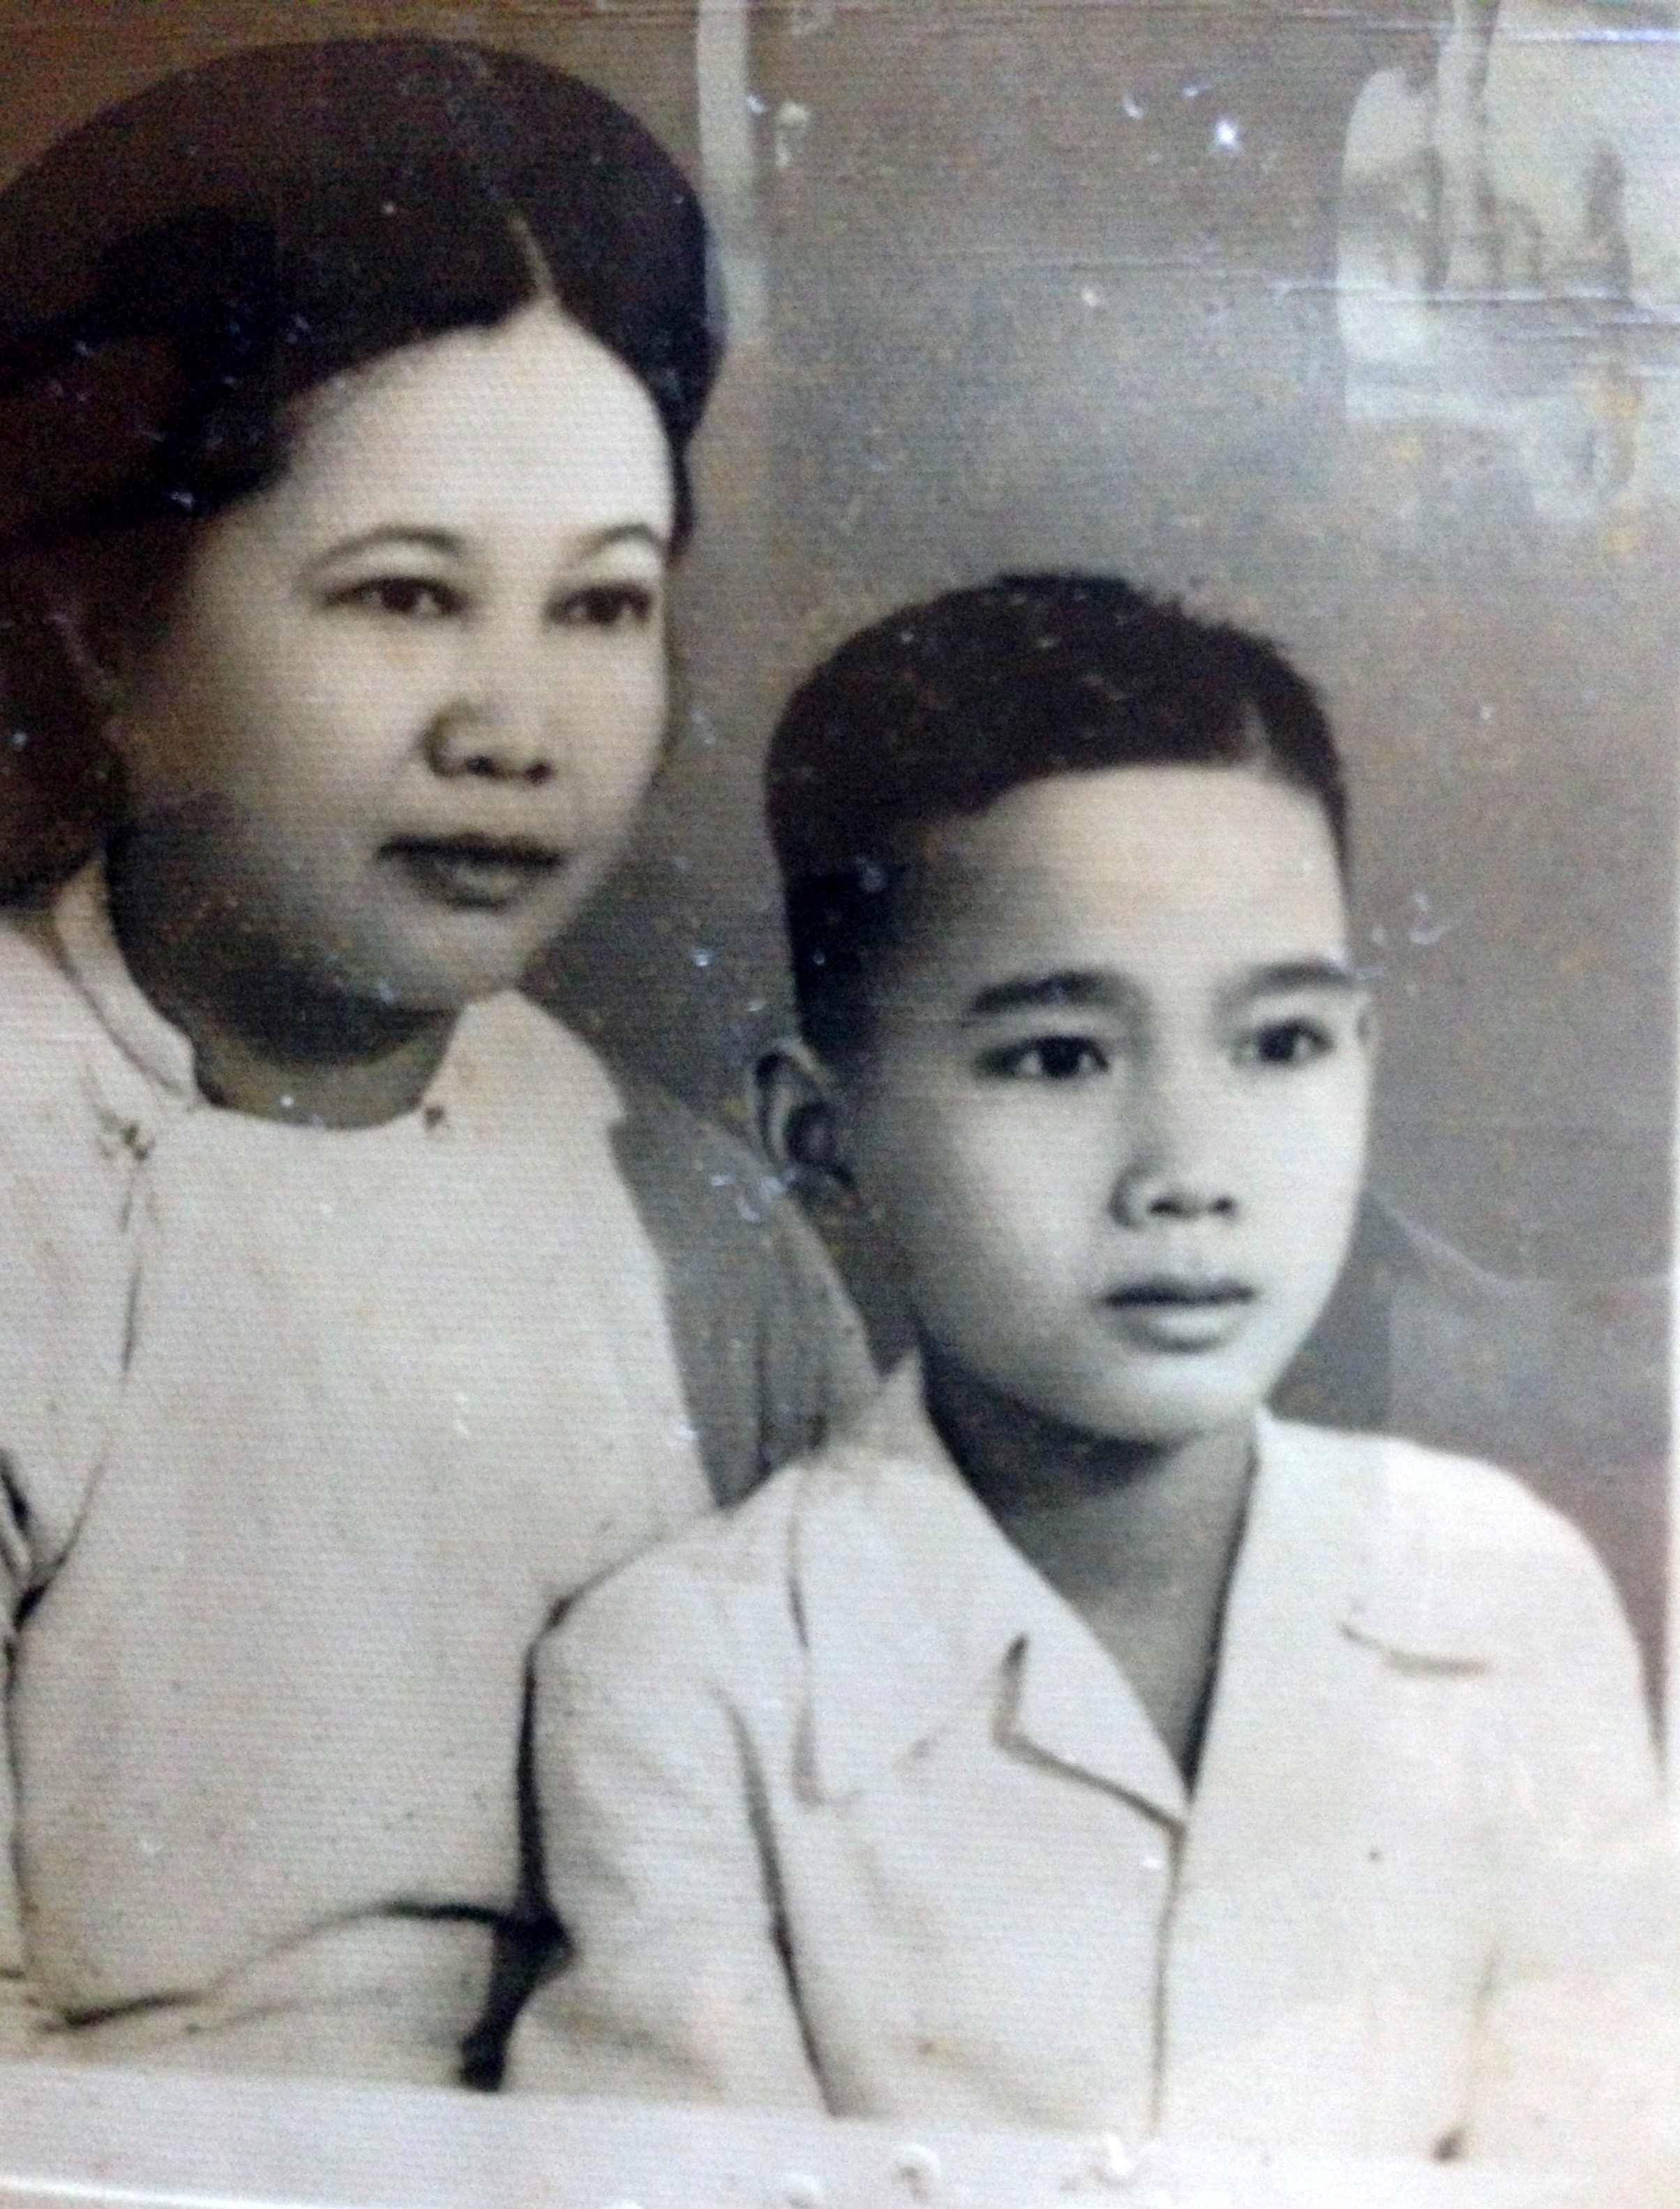 Mẹ và Khoa khi 12 tuổi (1955)

